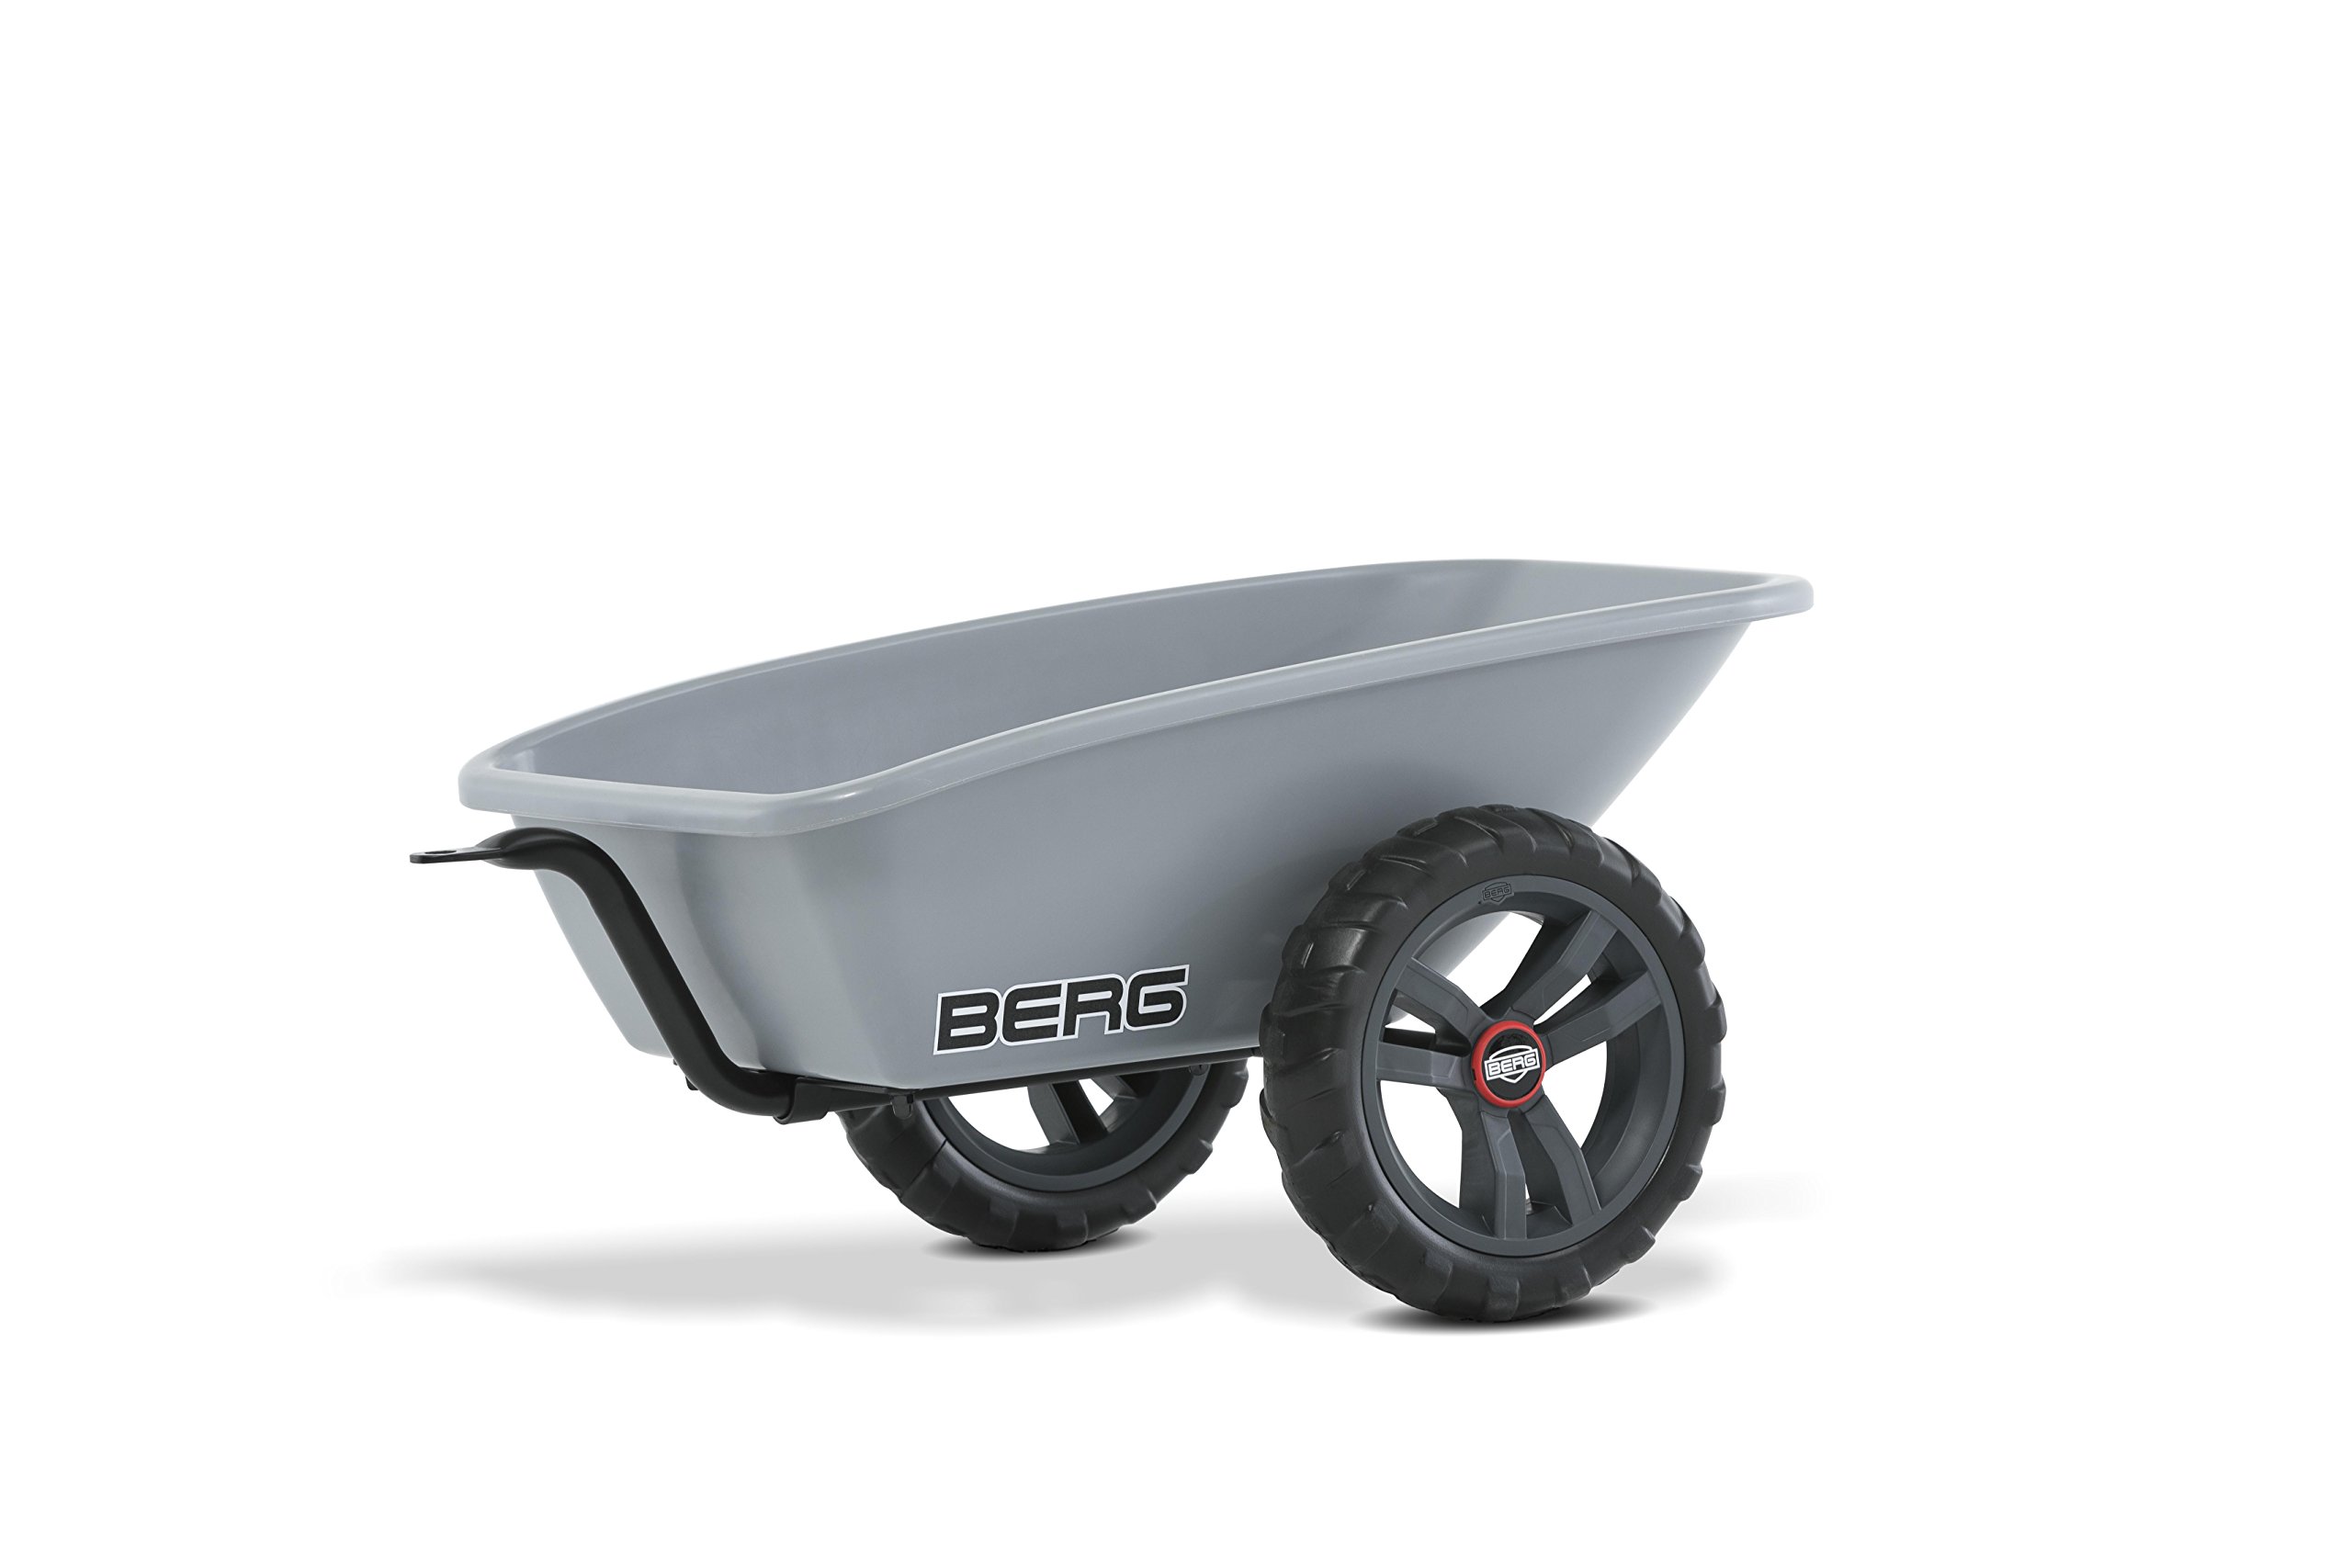 BERG Trailer S (für BERG Buzzy), Grey, 73x 79 x 33 cm